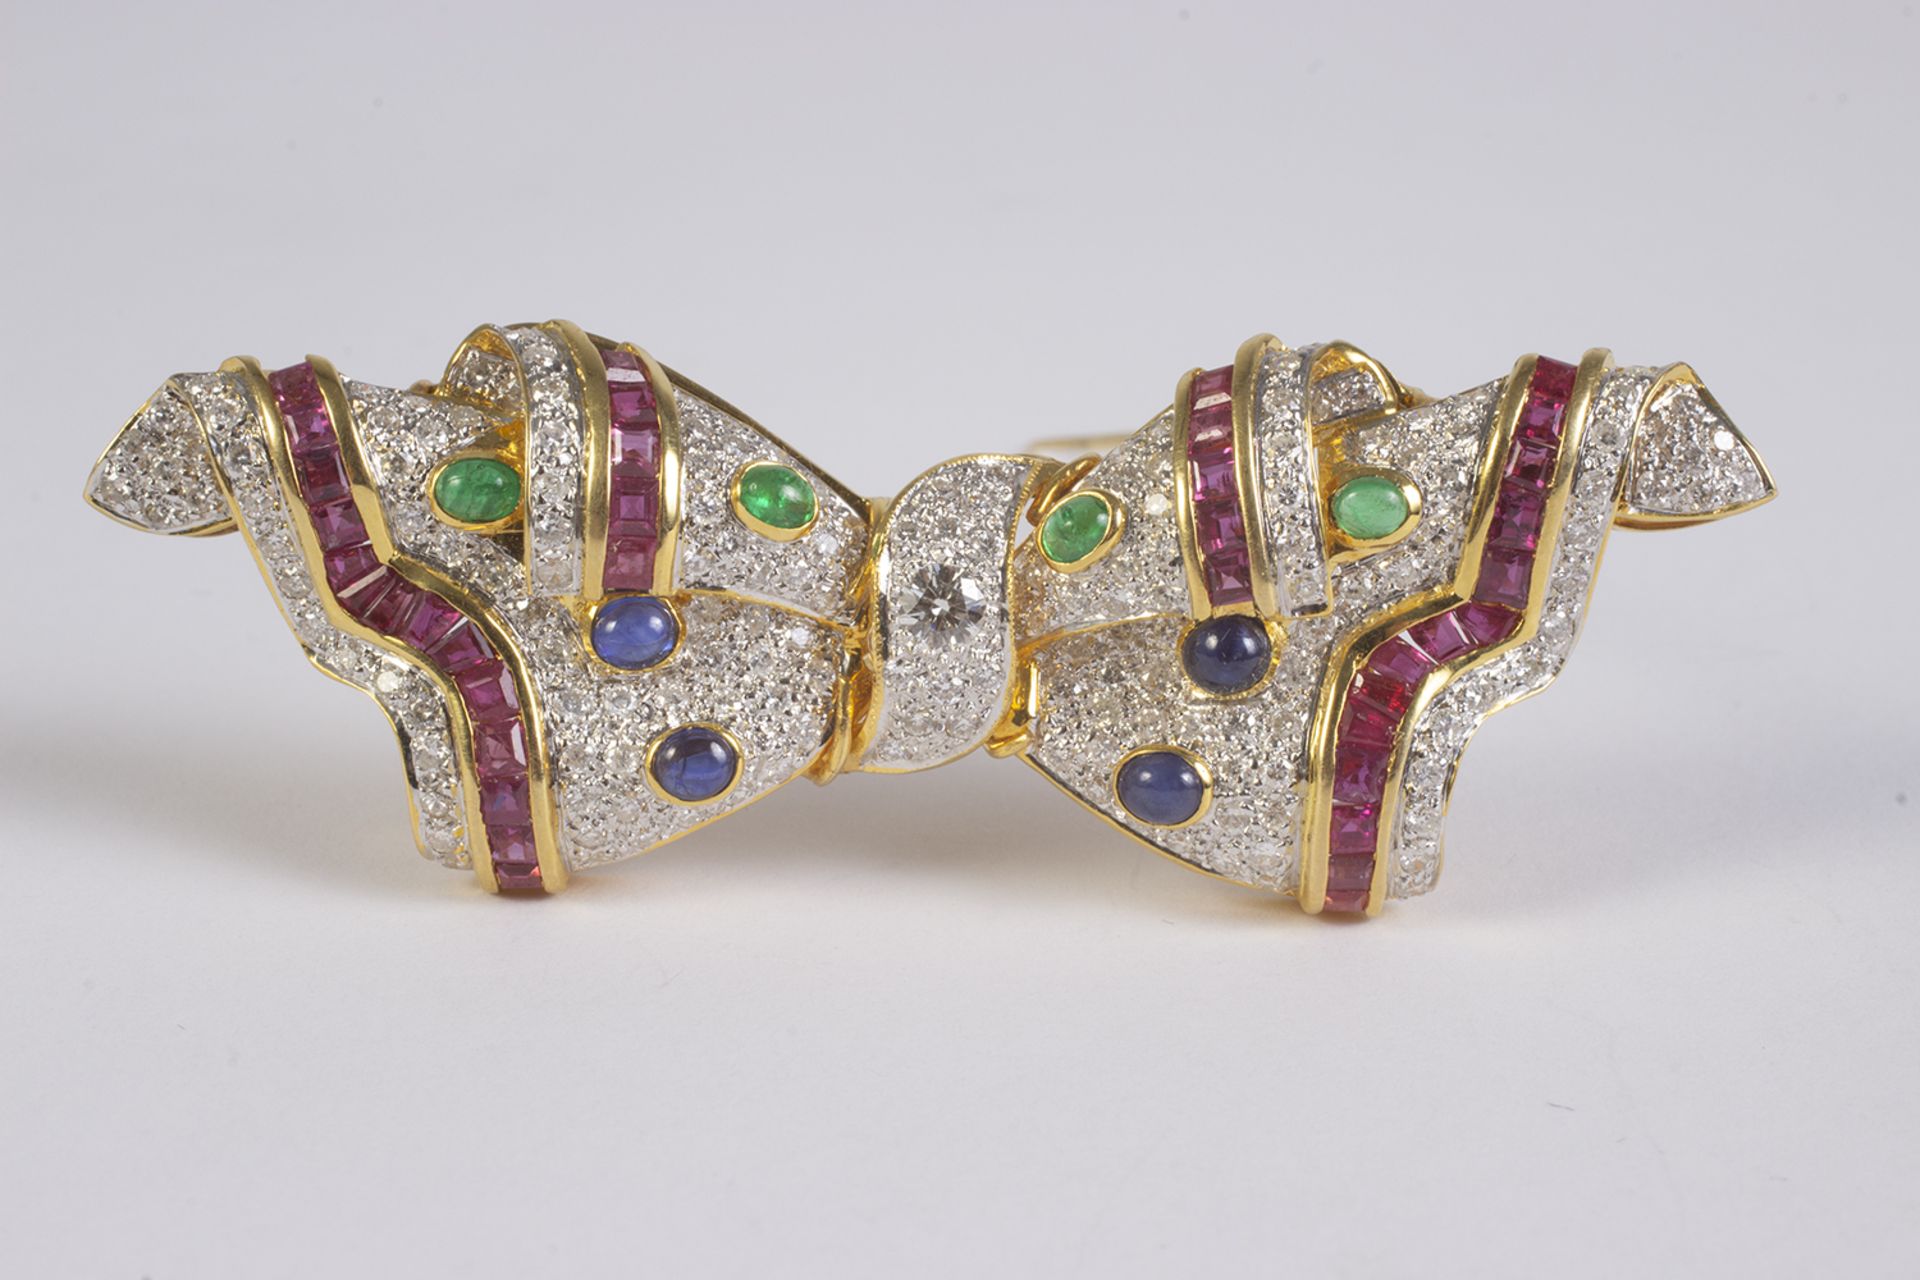 Broche en forma de lazo en oro, diamantes talla brillante, esmeralda., zafiros azules talla cabujón